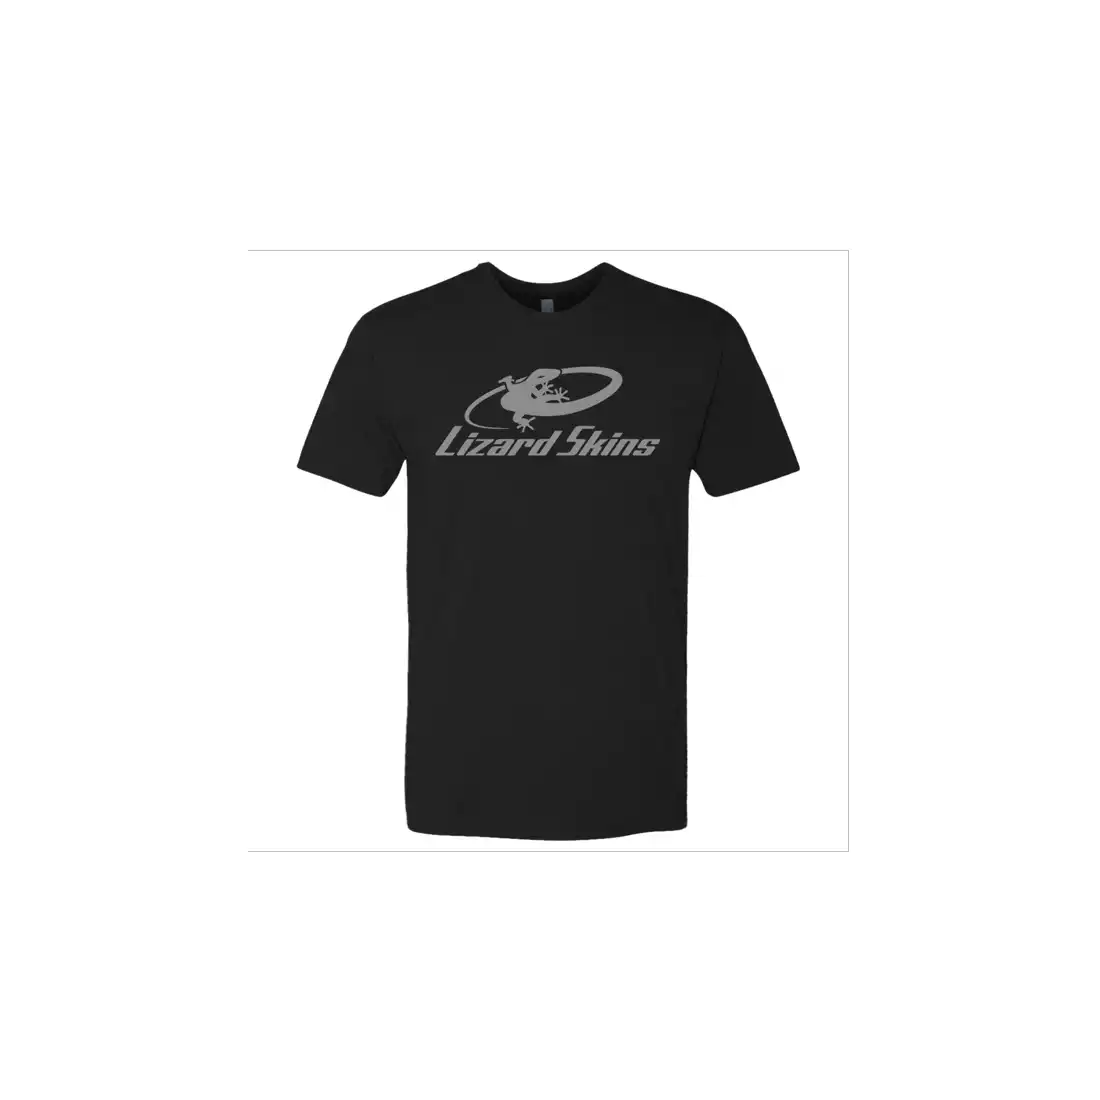 LIZARD SKINS SUBTLE LOGO classic t-shirt black